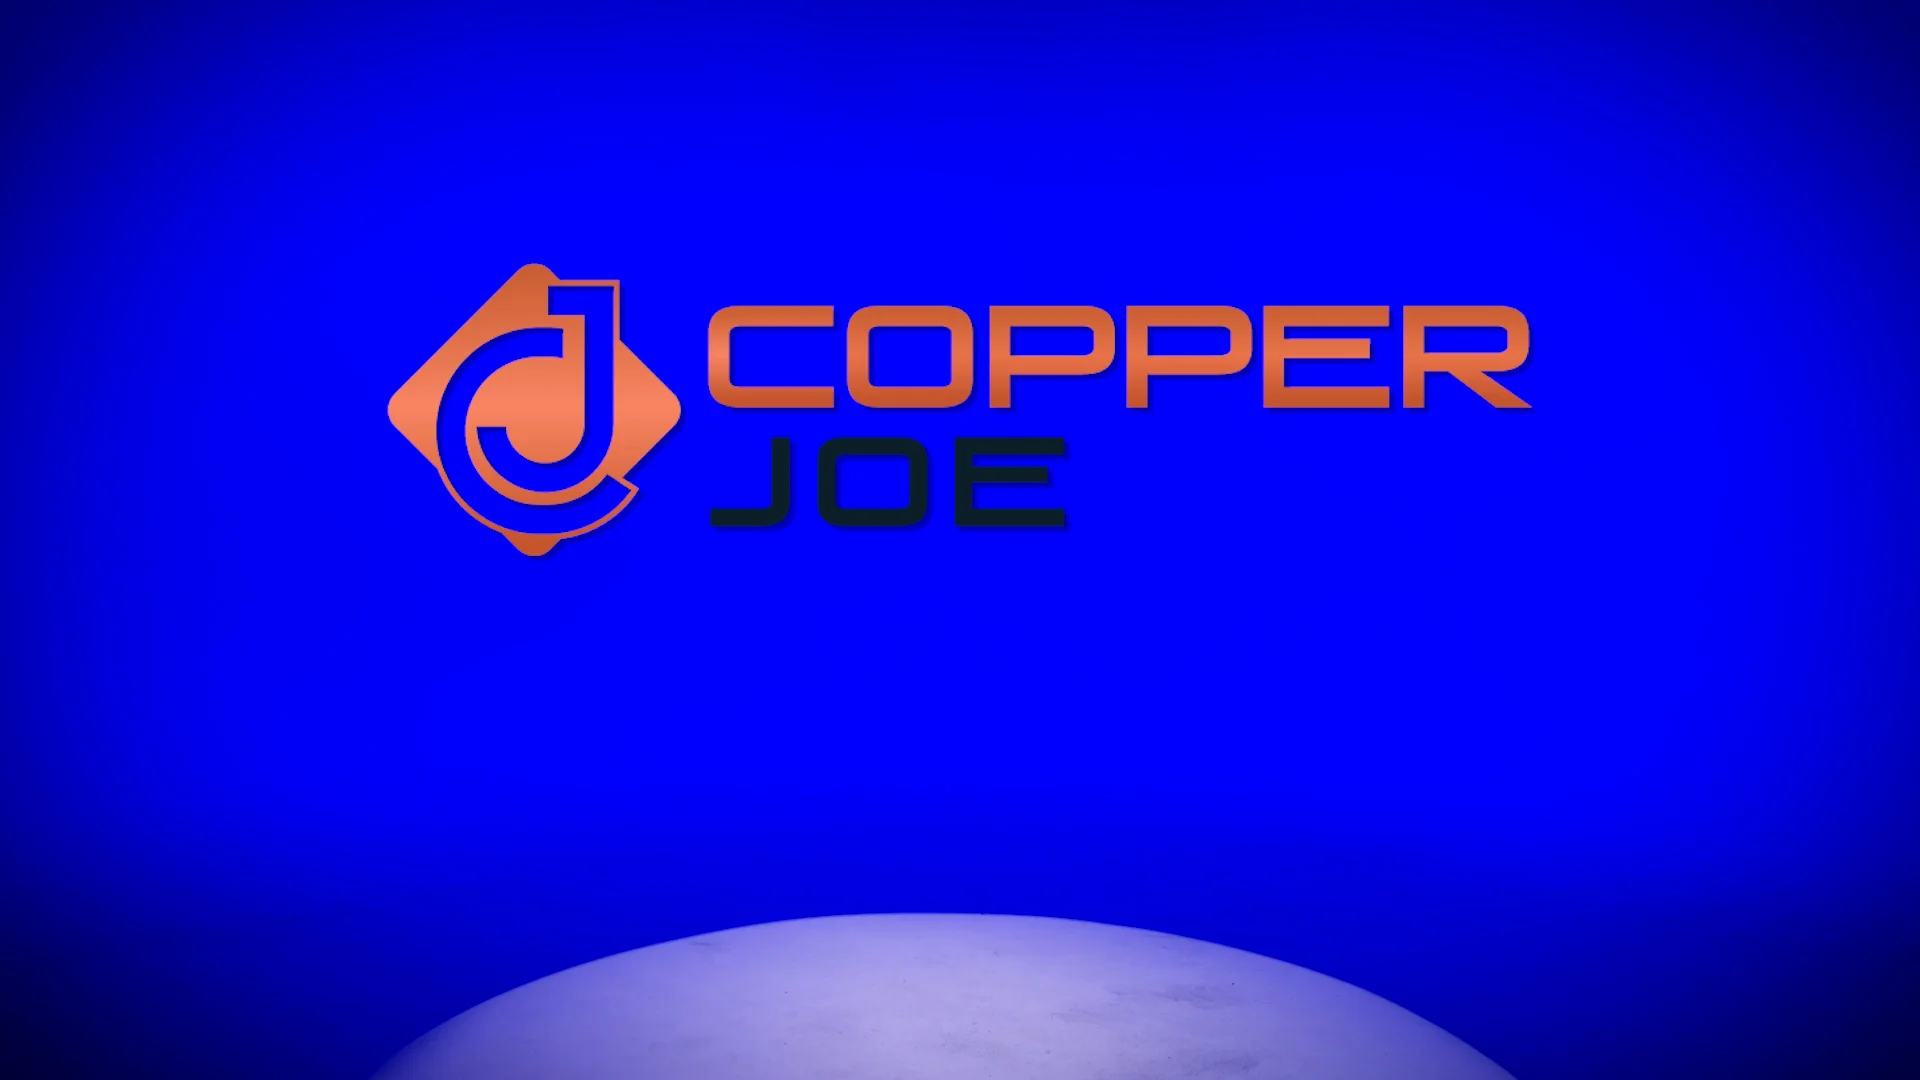 Copper Joe Compression Official on Vimeo